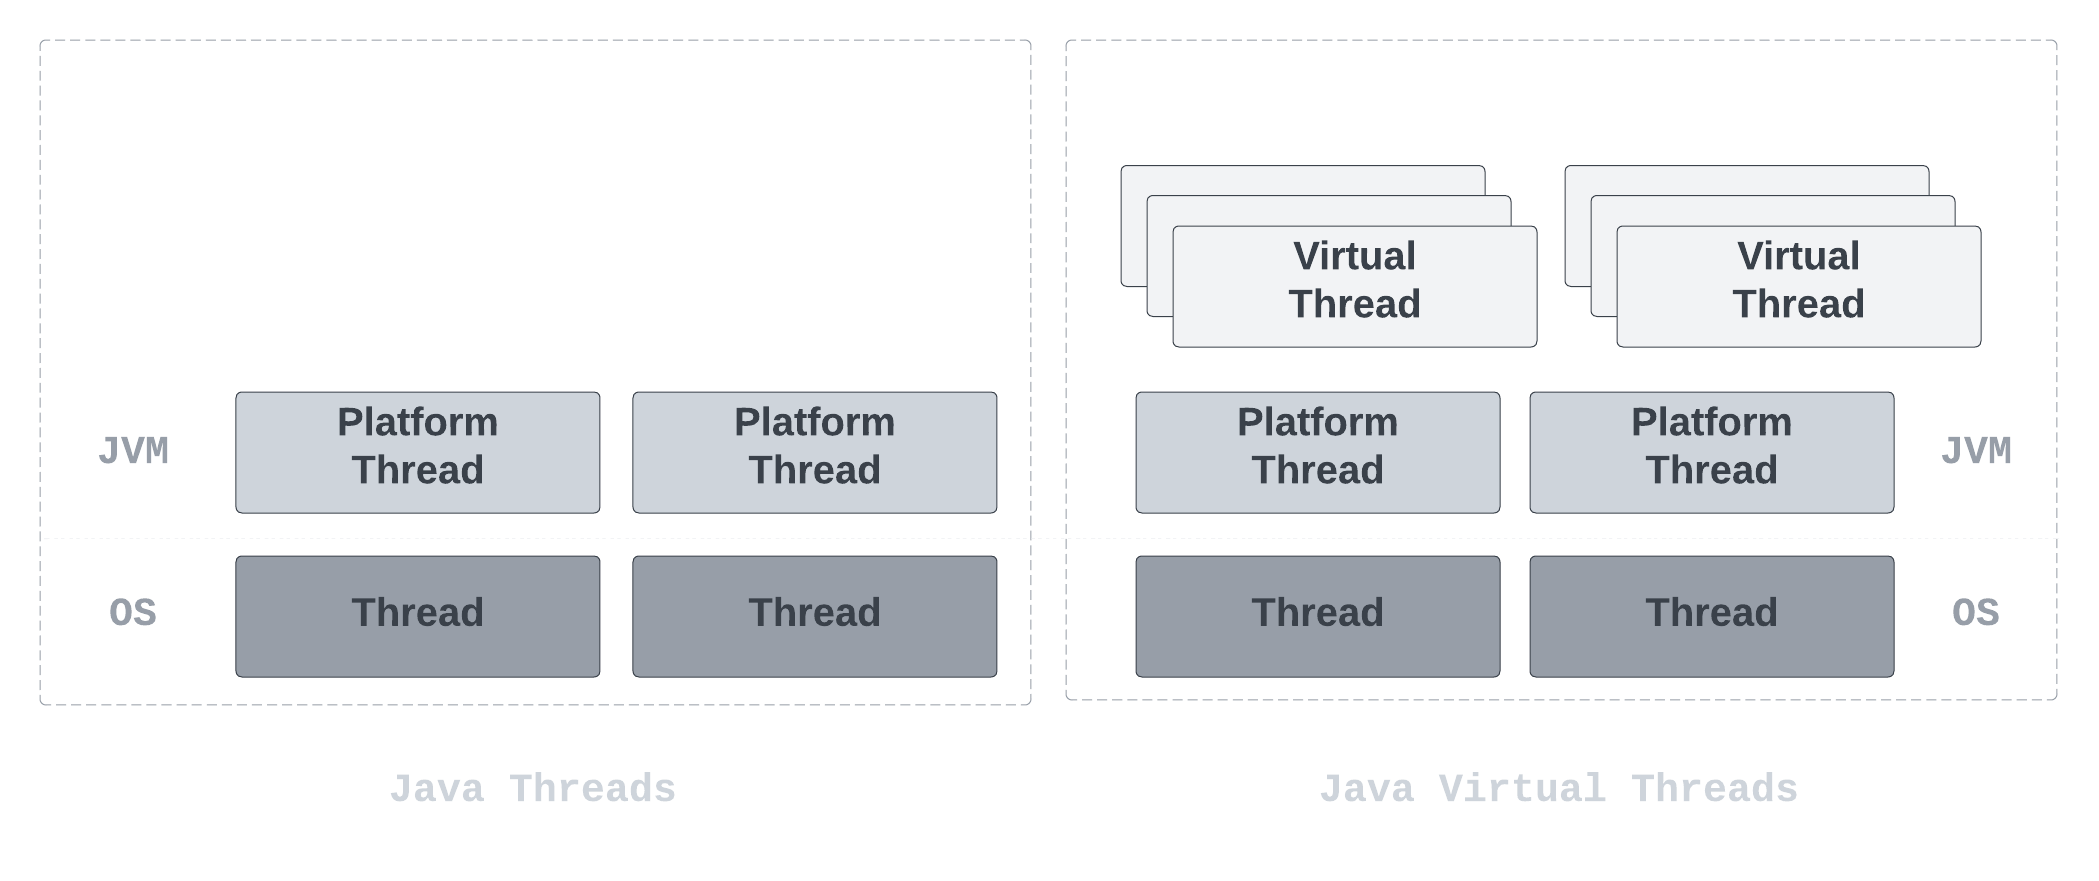 Virtual threads vs. platform threads